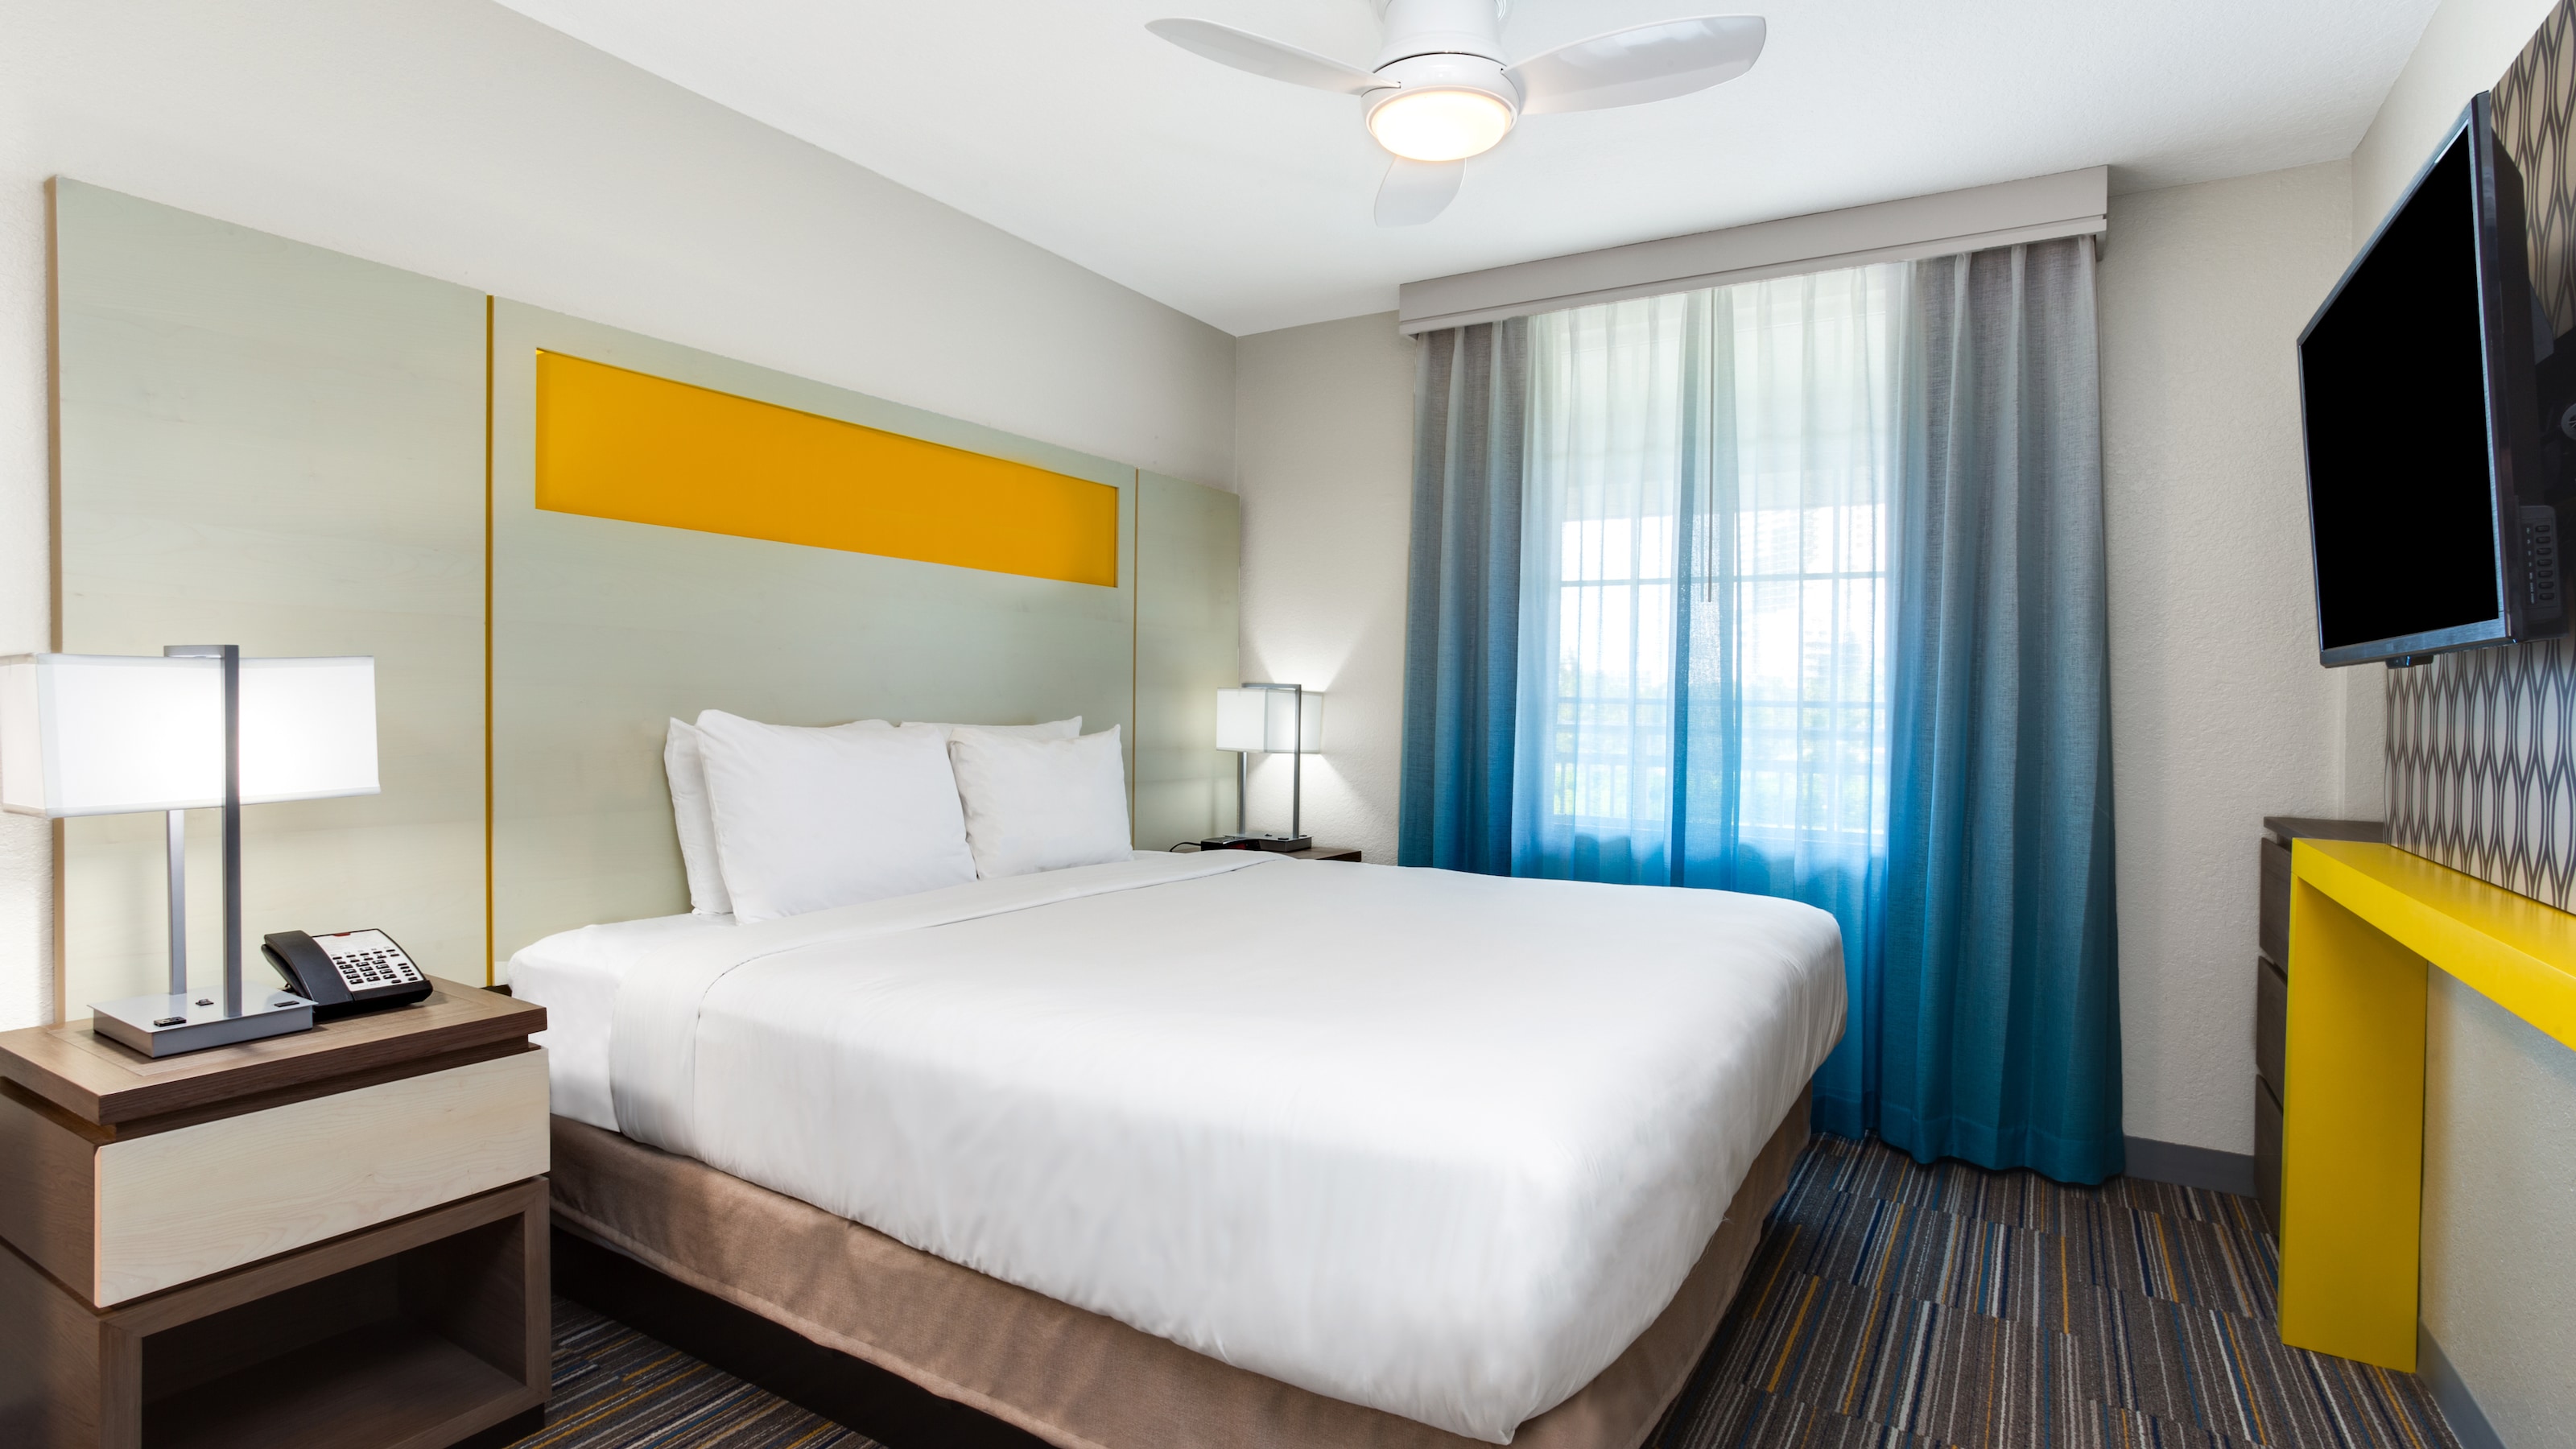 Disfs Holiday Inn Resort Orlando Suites 2br Queen Suite Room 16x9 